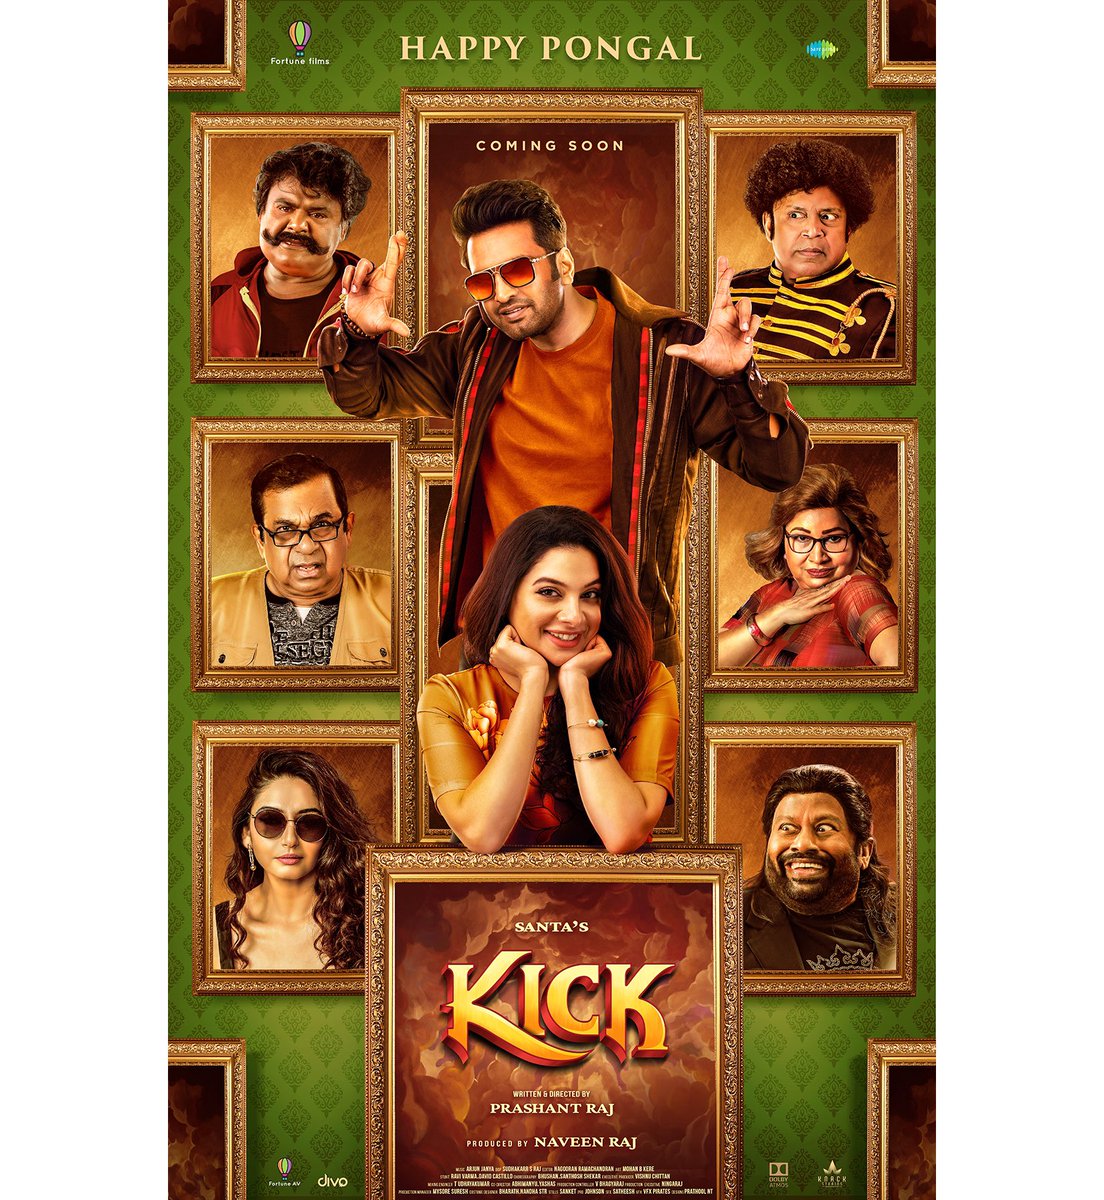 Pongal wishes from team #KICK 🤞 here's a new poster from the team featuring the entire cast. Coming to cinemas soon 💥

#HappyPongal #கிக் #SantasKick #ActionComedy @iamsanthanam @iamprashantraj @TanyaHope_offl @raginidwivedi24ArjunJanyaMusic @iamnaveenraaj #FortuneFilms